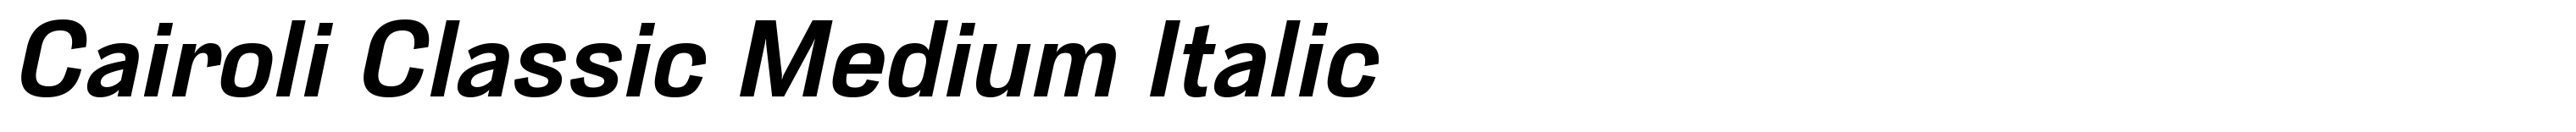 Cairoli Classic Medium Italic